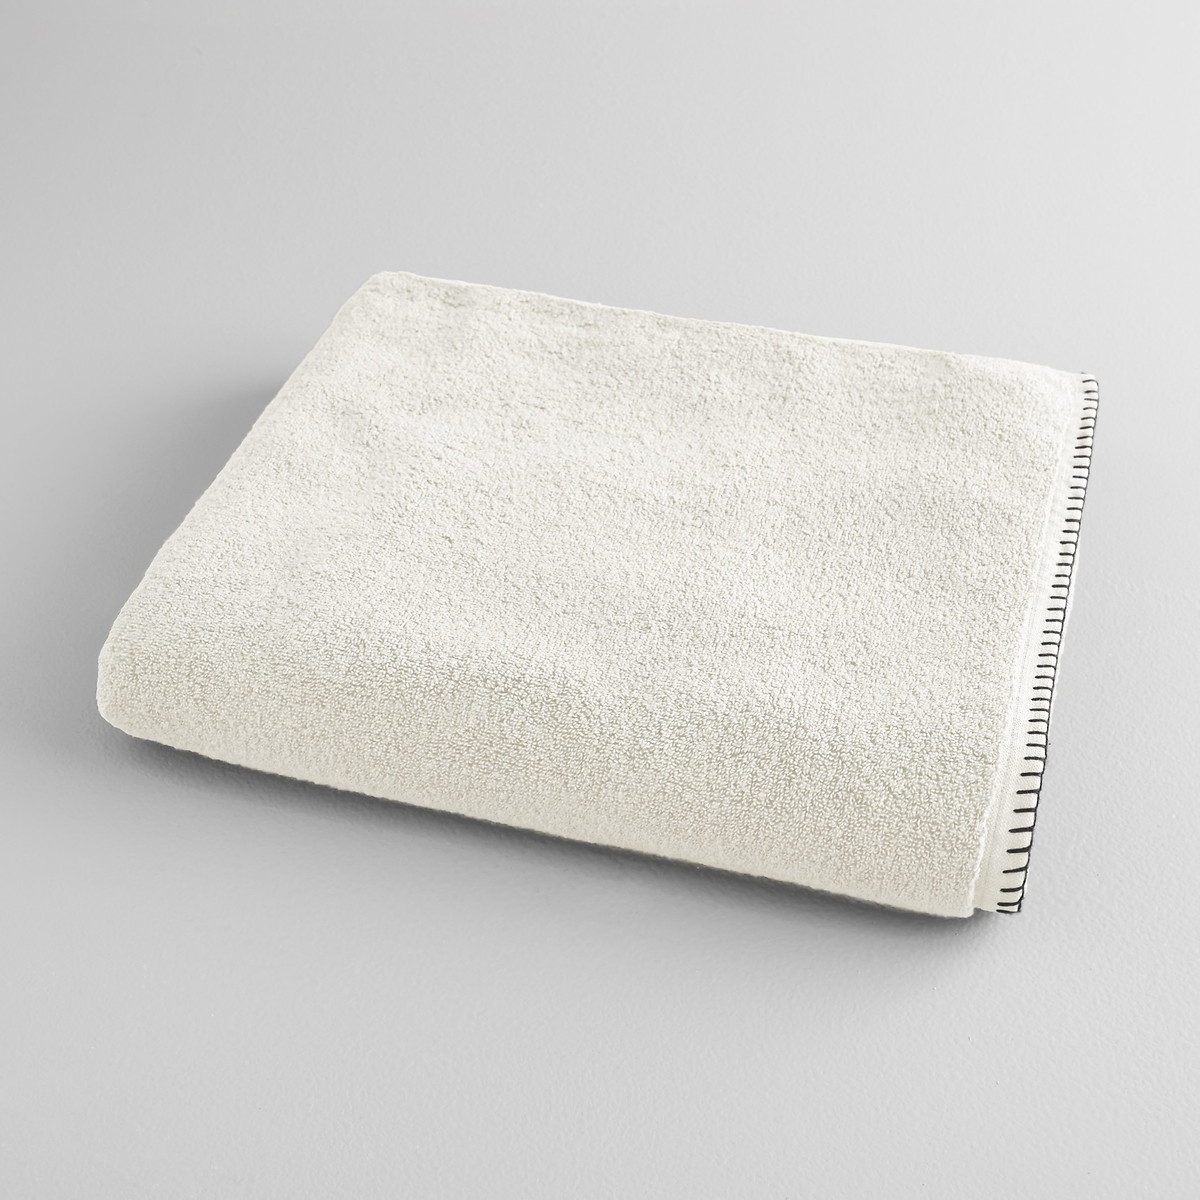 Банное полотенце Kyla 70 x 140 см белый полотенце банное из велюра 500 гм2 milleraie 70 x 140 см белый